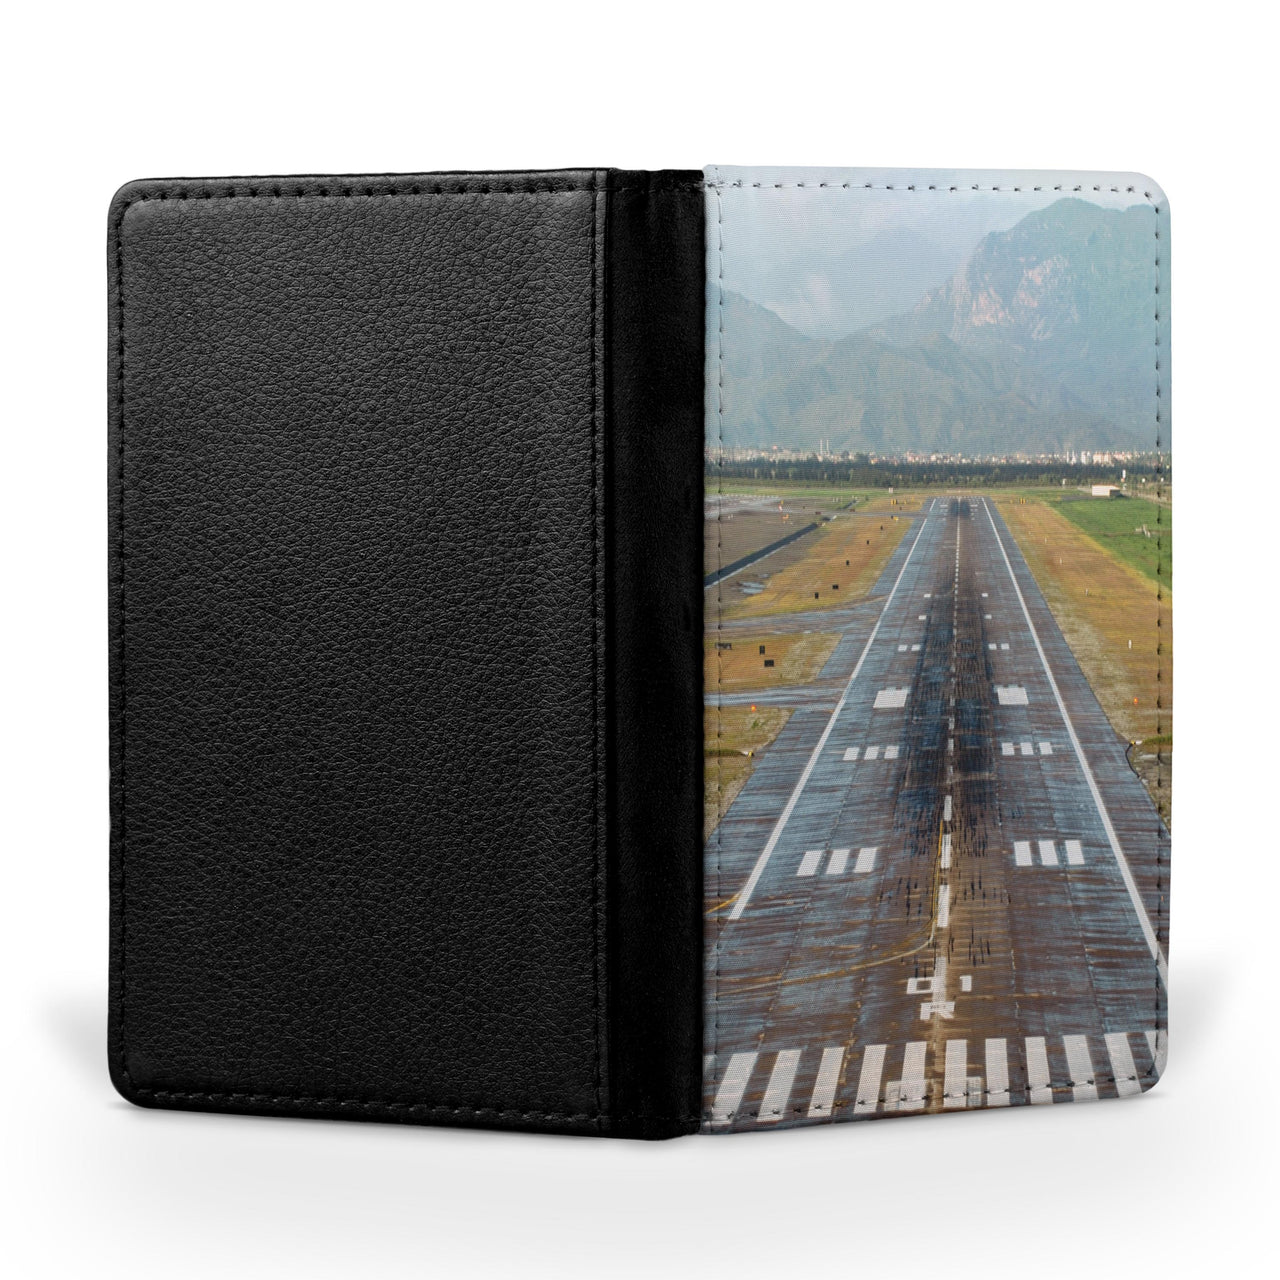 Amazing Mountain View & Runway Printed Passport & Travel Cases